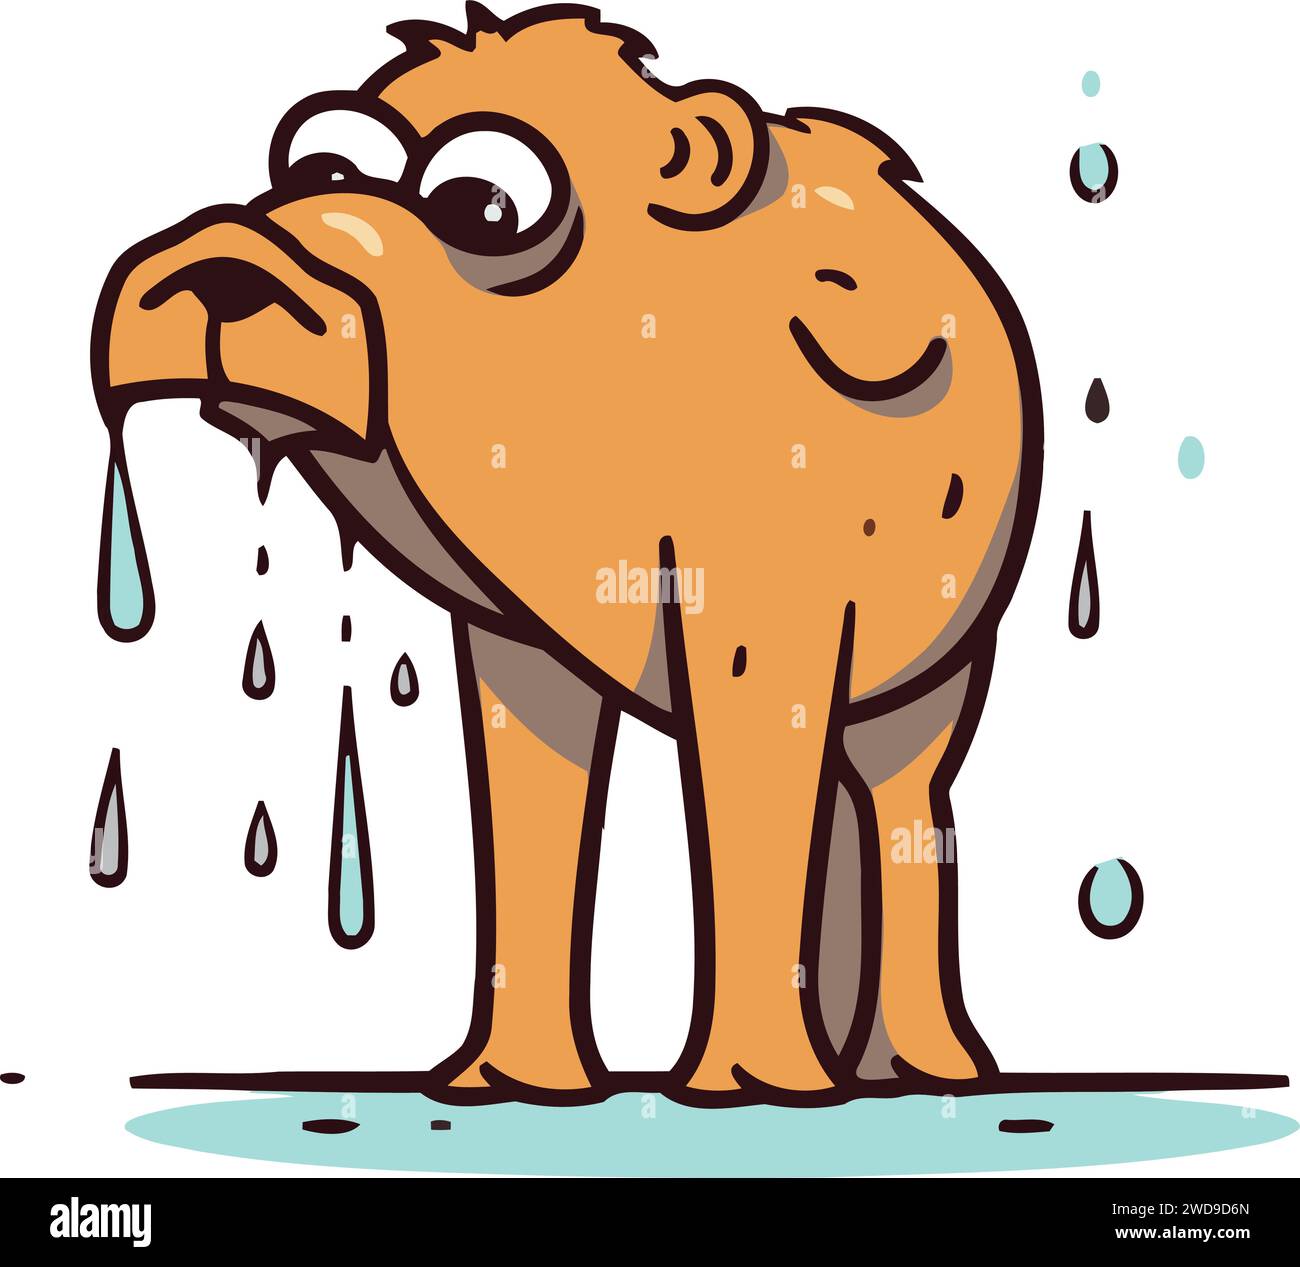 Sad cartoon bear with rain drops. Vector illustration of a sad bear. Stock Vector